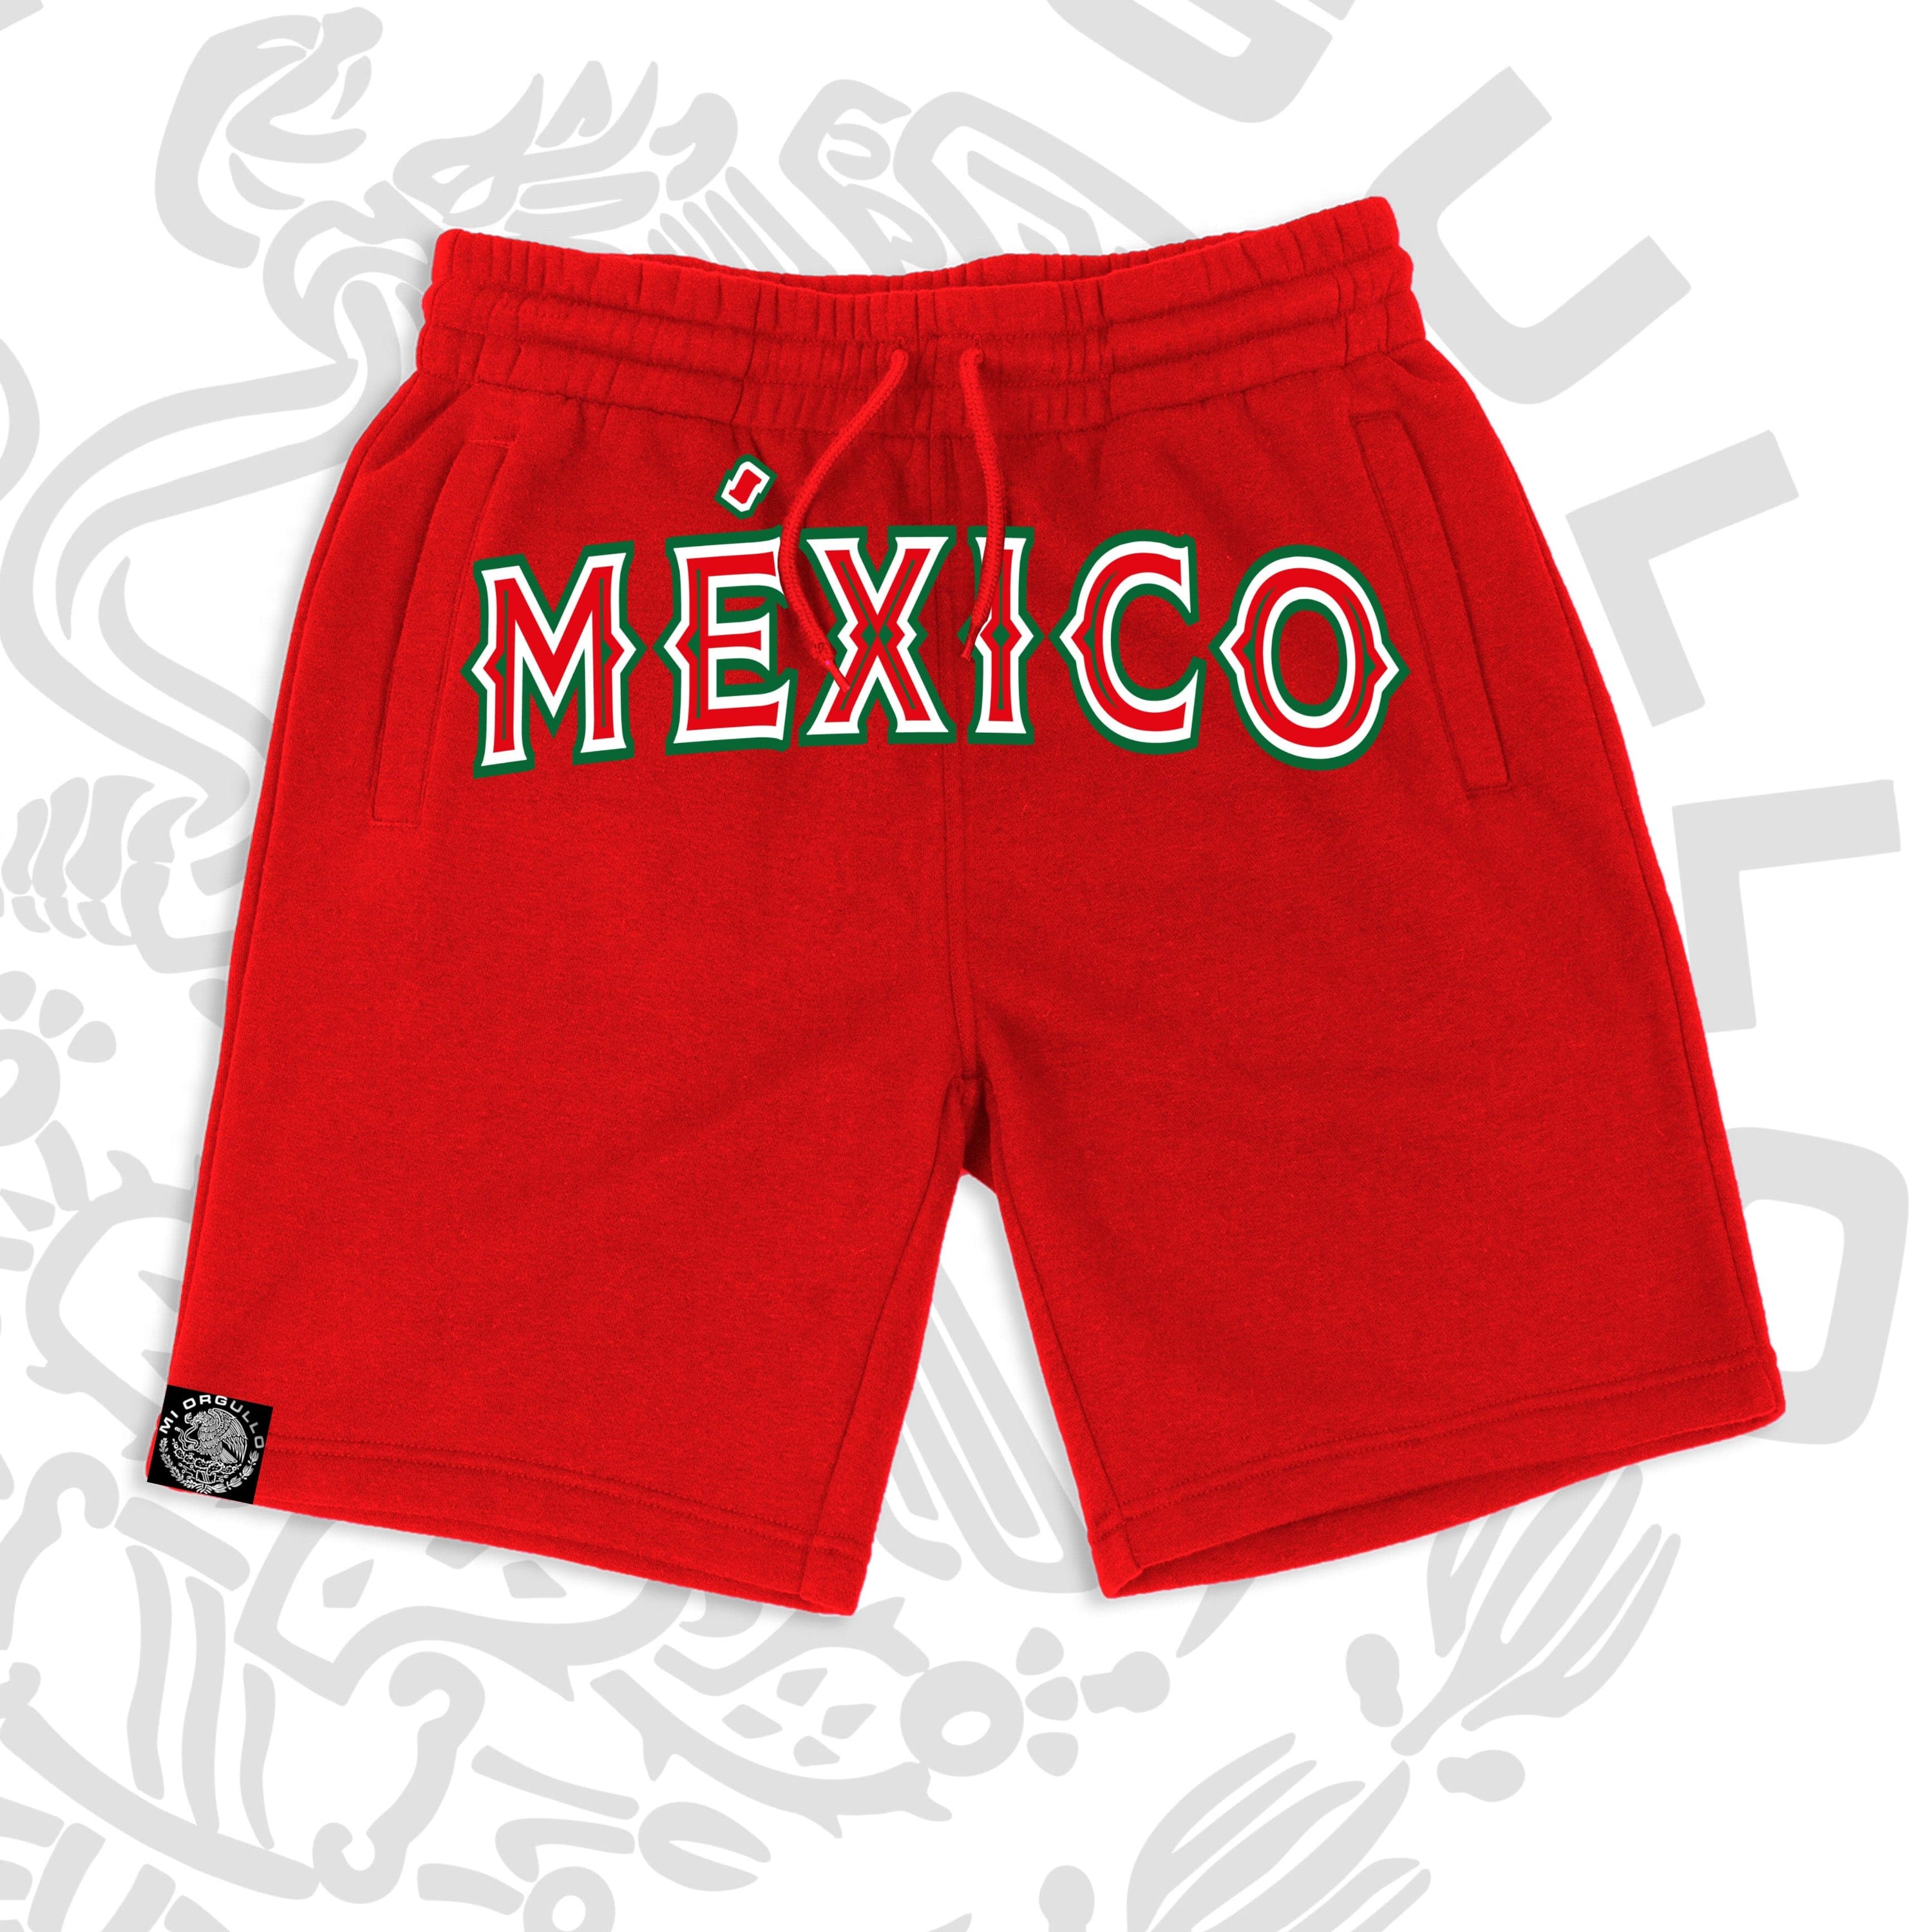 MÉXICO RED SHORTS